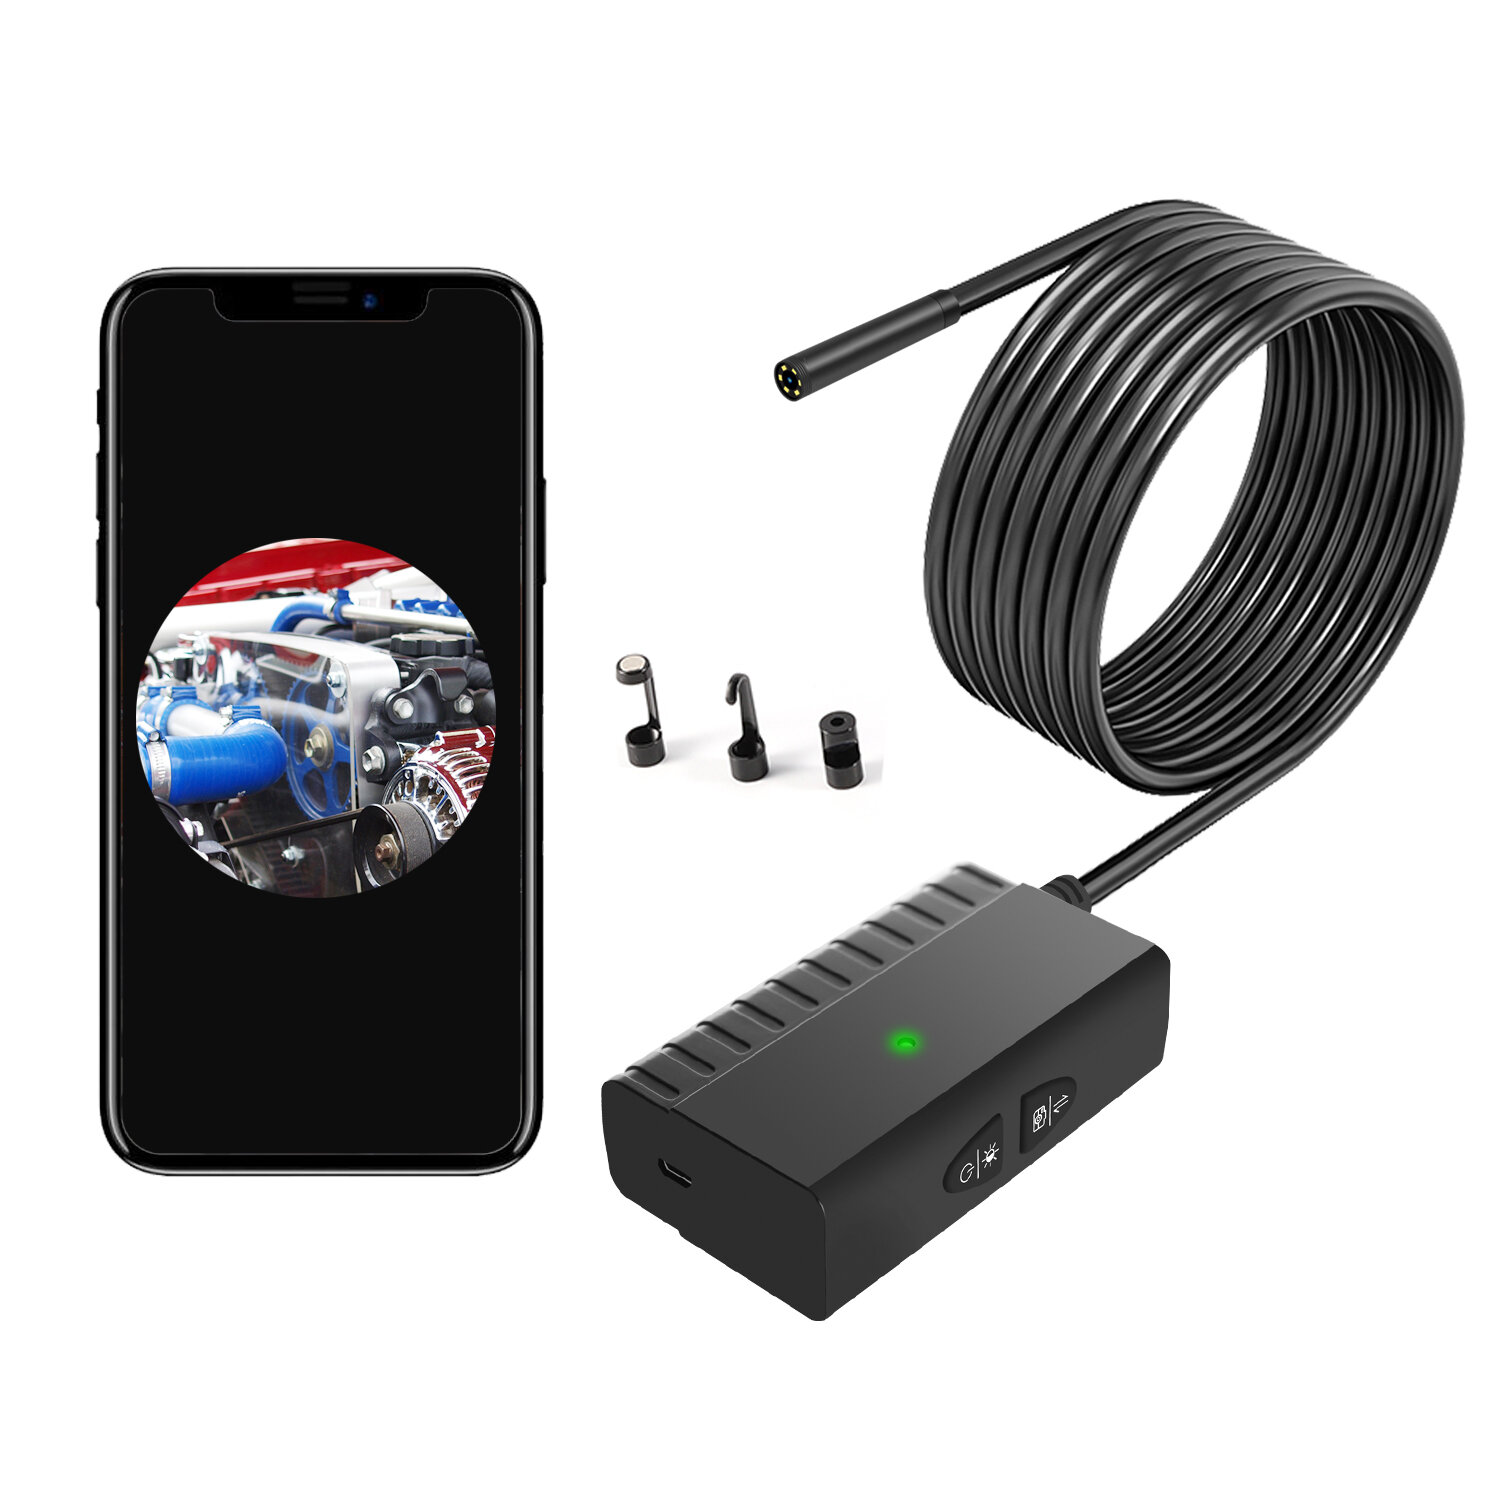 

NK-WS3-55 5.5mm Camera Dual Lens WiFi Borescope HD Inspection Semi-Rigid Cable 6 LED Borescope for Android iOS Phone